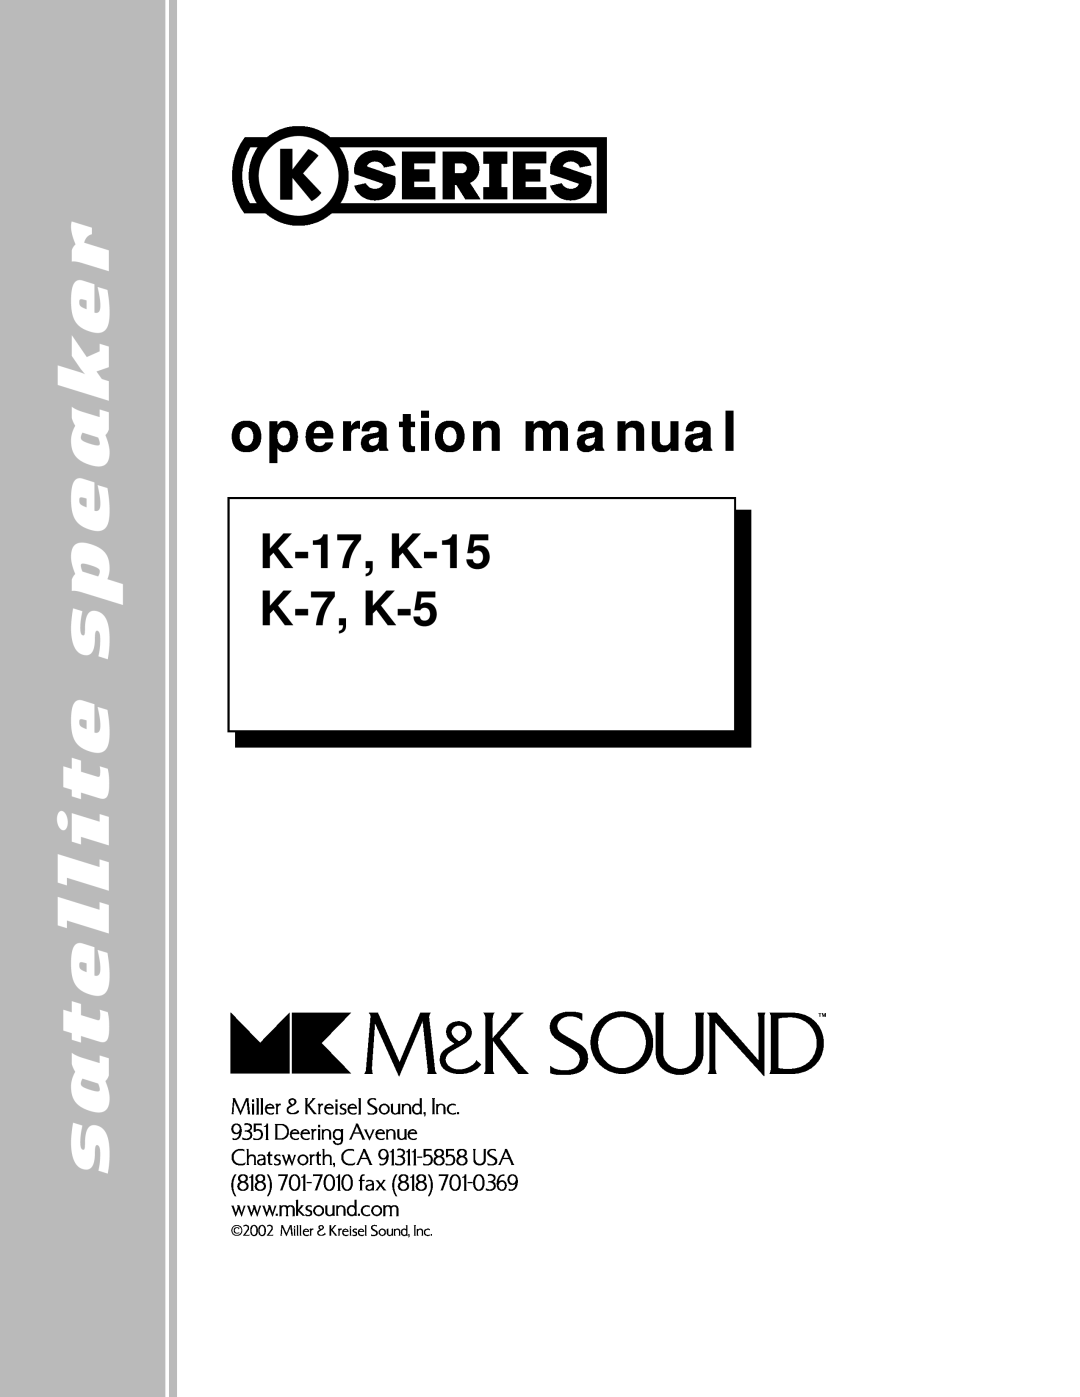 MK Sound operation manual satellite speaker, K-17, K-15 K-7, K-5, Miller & Kreisel Sound, Inc 9351 Deering Avenue 